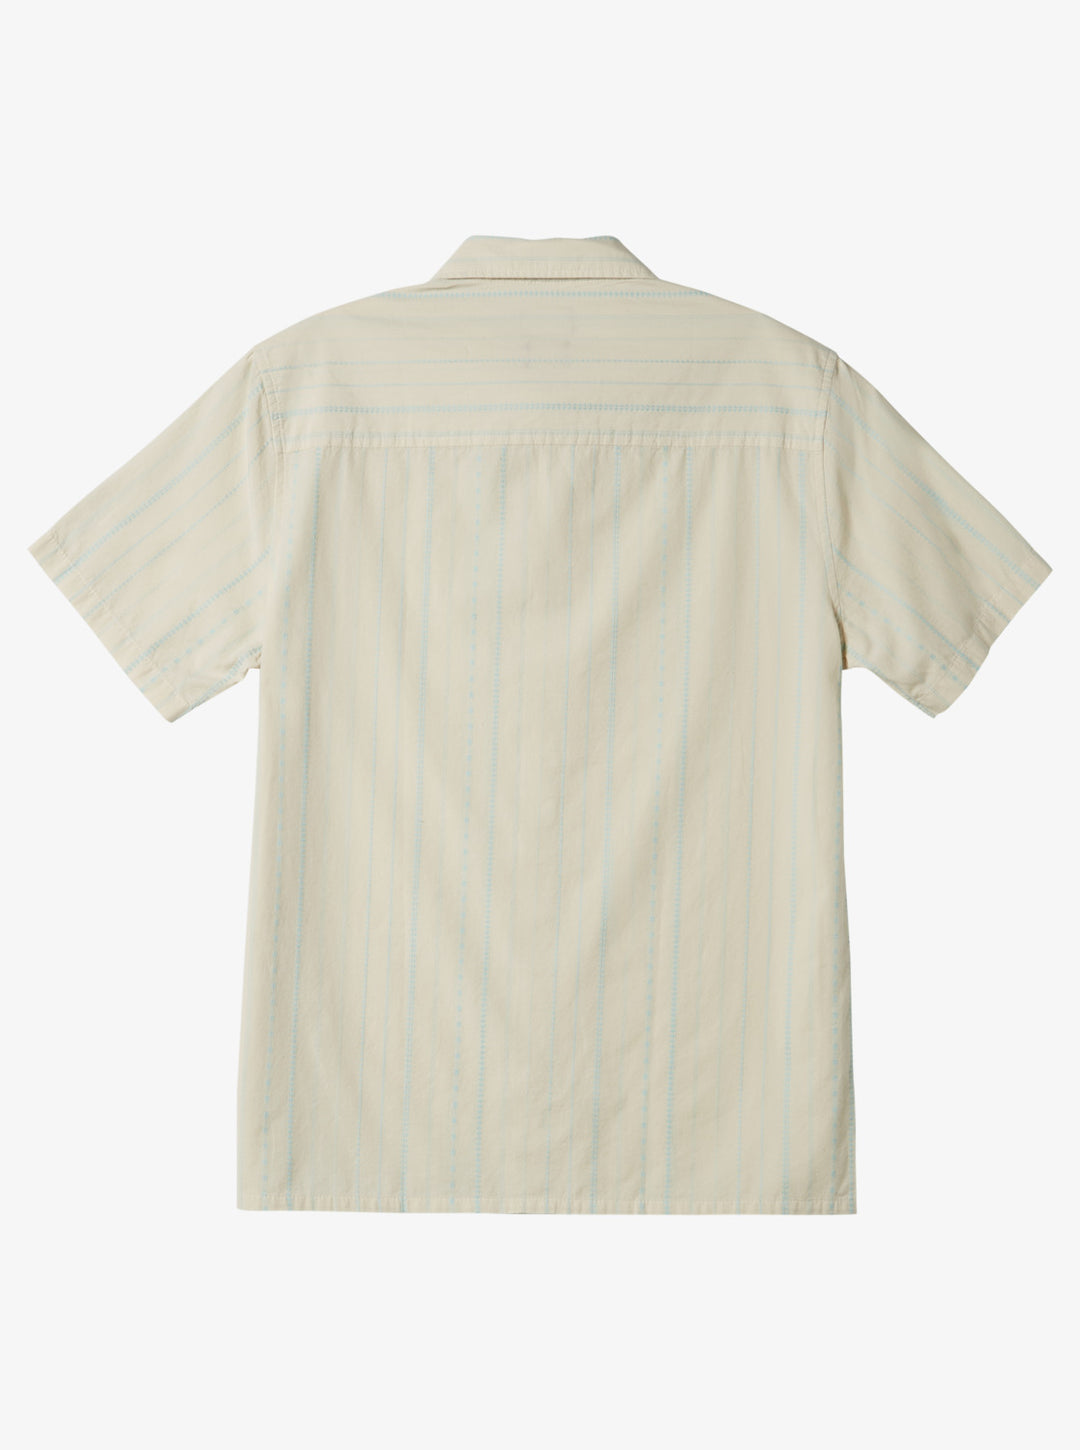 Quiksilver Pacific Stripe Short Sleeve Woven Shirt - Pacific Stripe - Sun Diego Boardshop